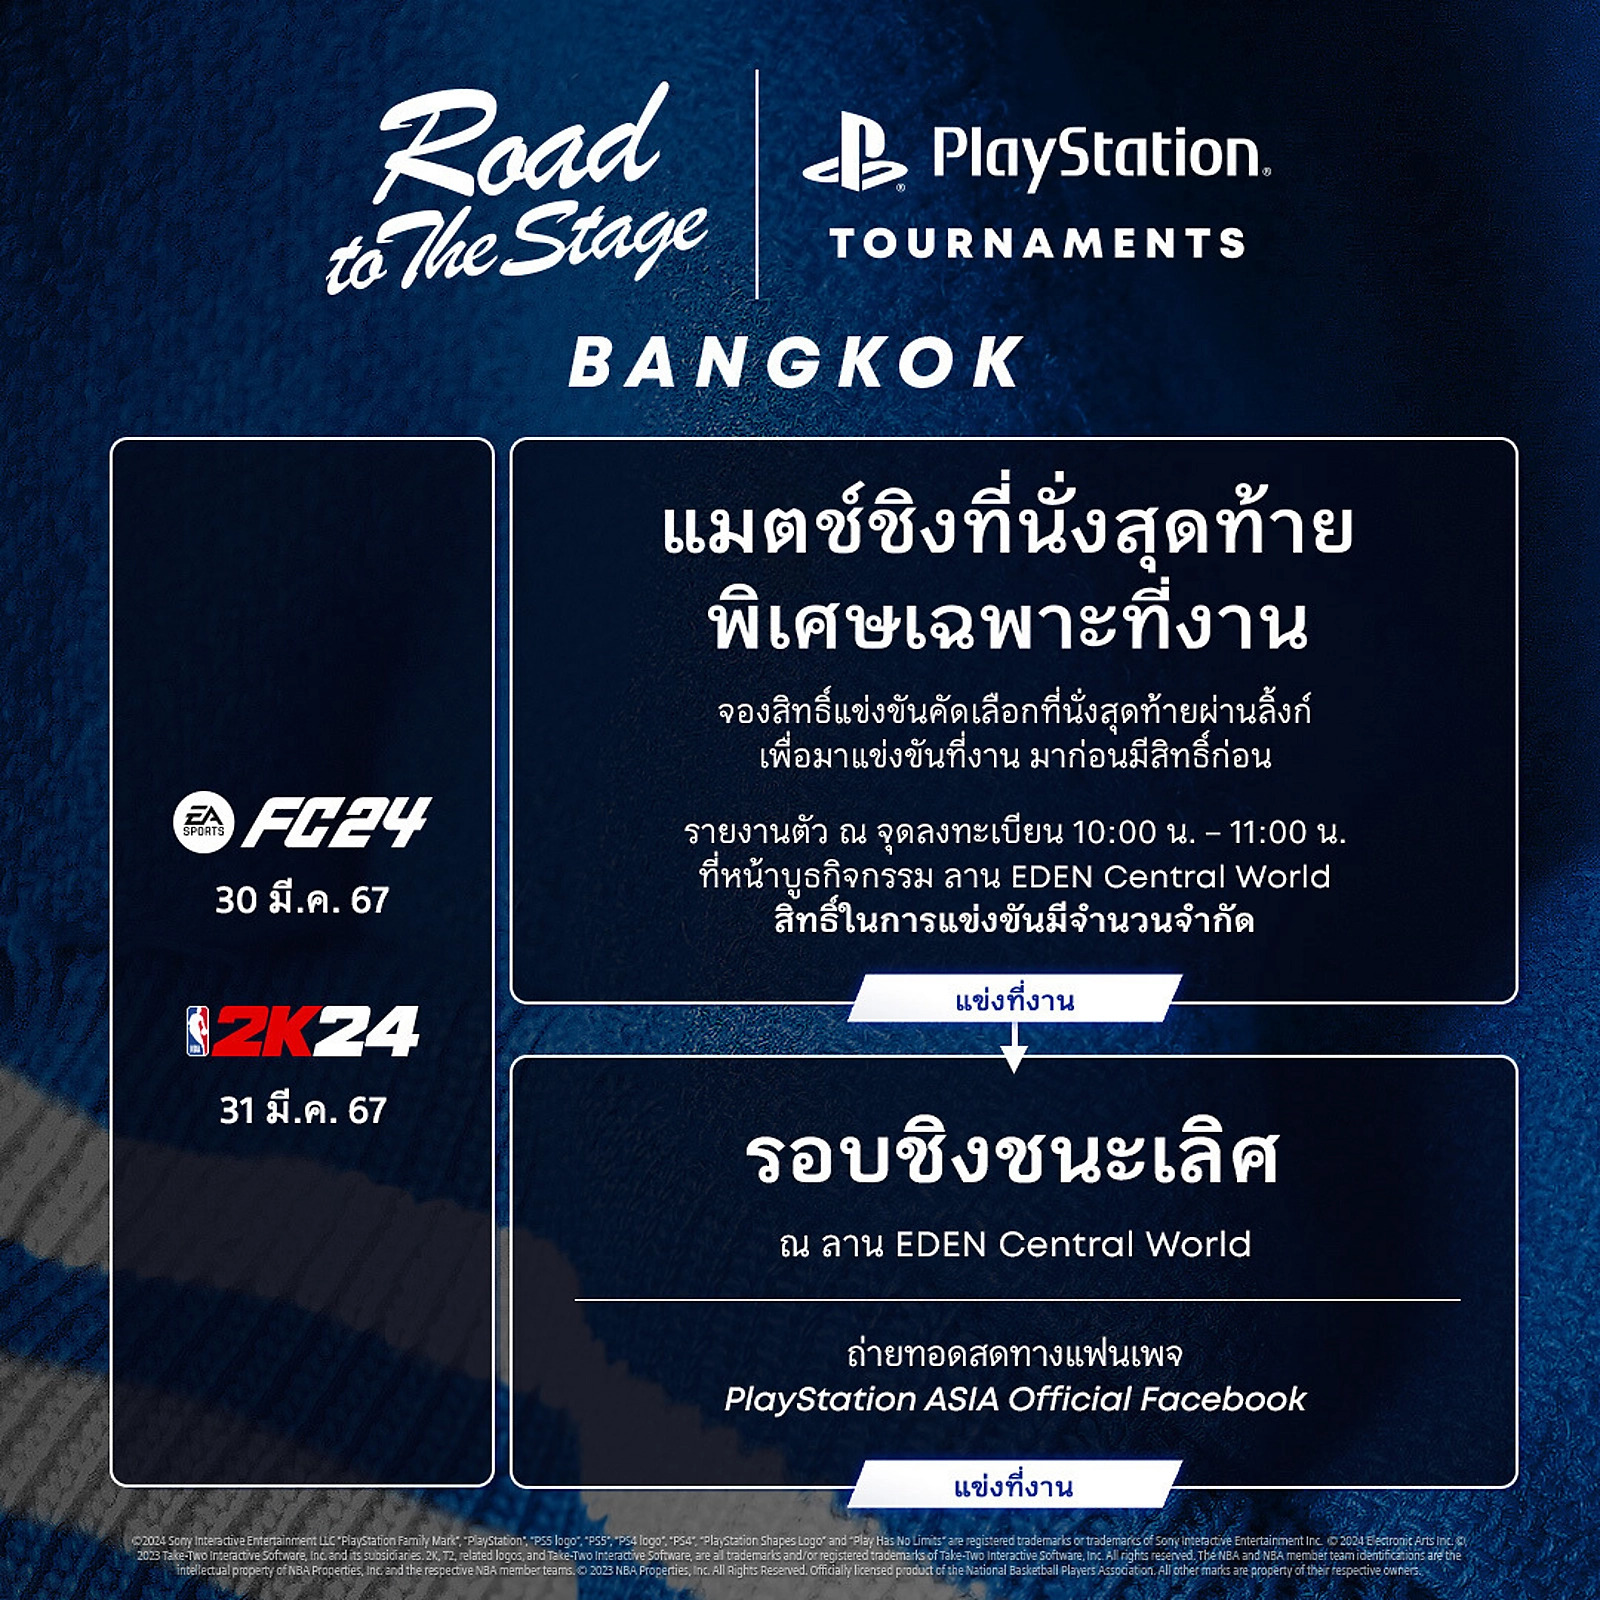 PlayStation ประกาศจัดศึกตัดสินการแข่งขันรายการ 'Road to the Stage 2024 Final' 30 – 31 มีนาคมนี้ ที่เซ็นทรัลเวิลด์